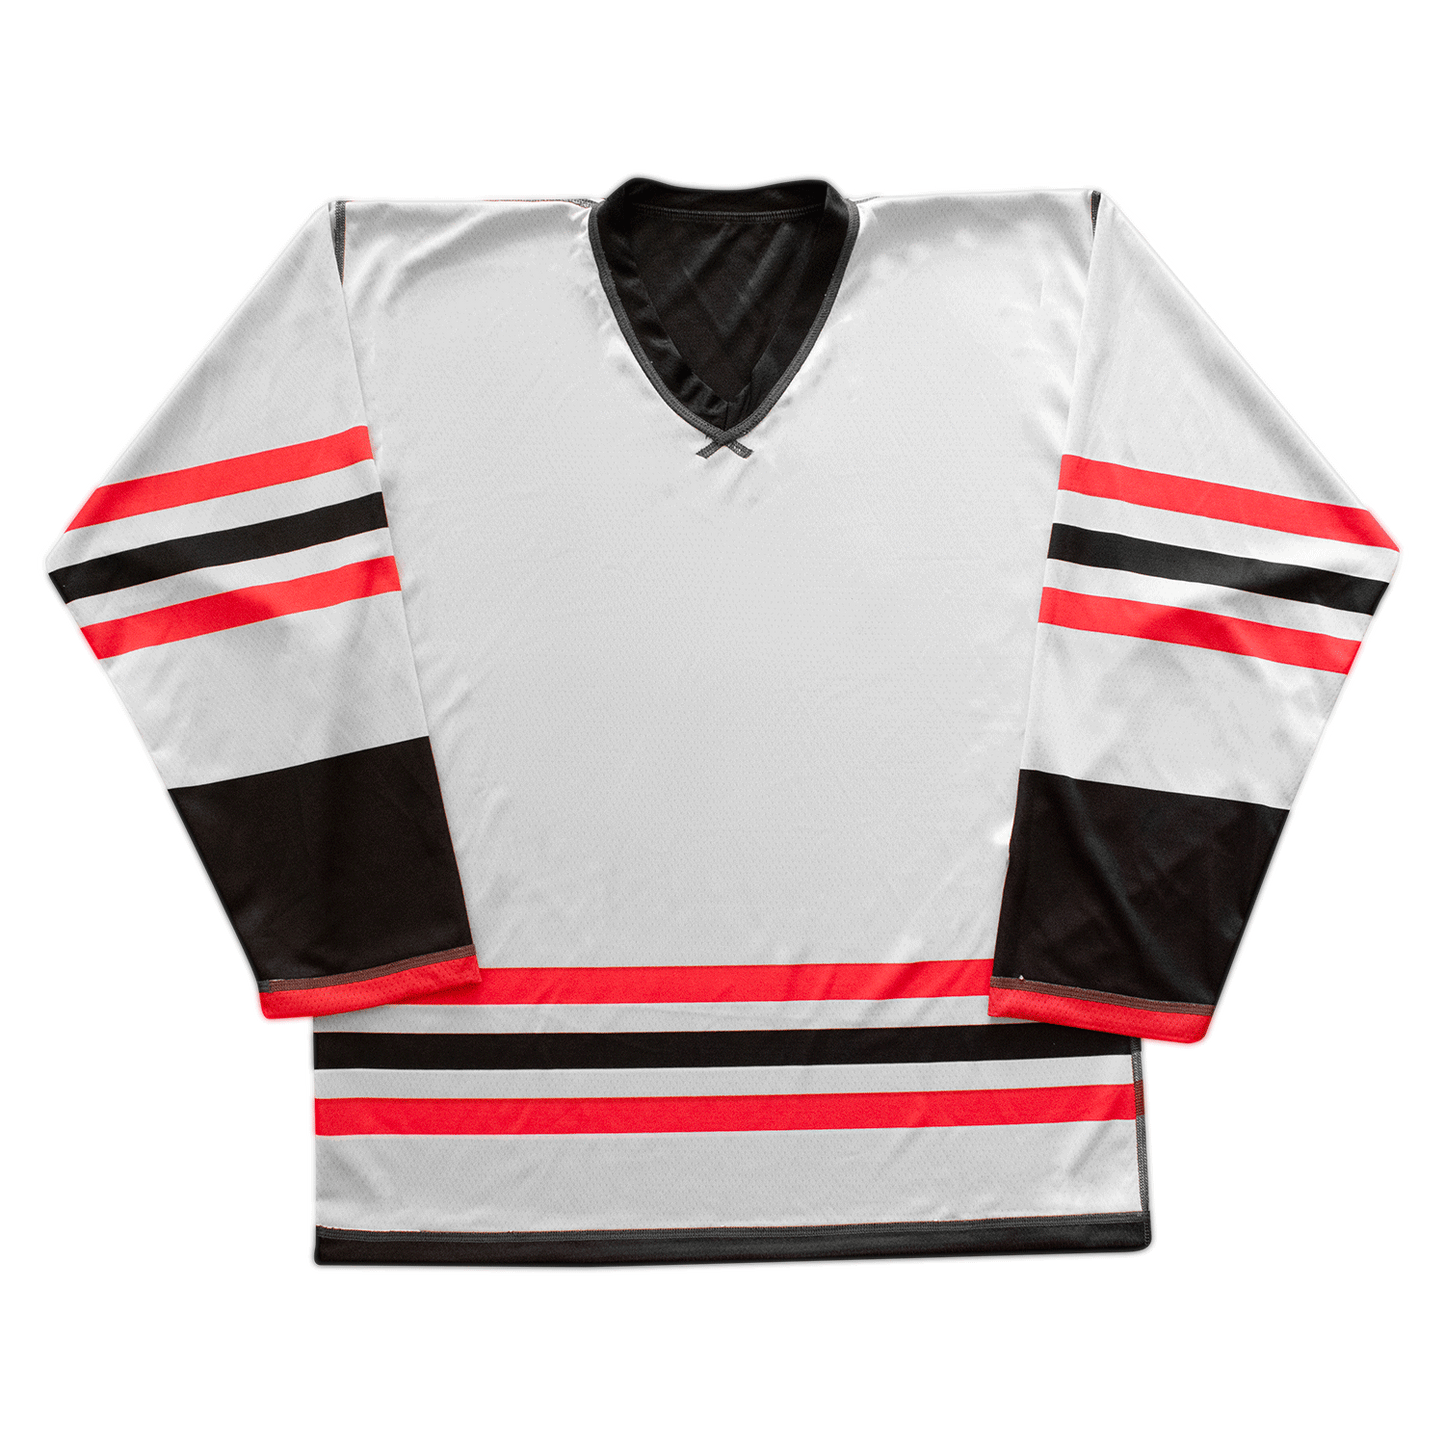 SPR300 Reversible Practice Hockey Jersey - Chicago